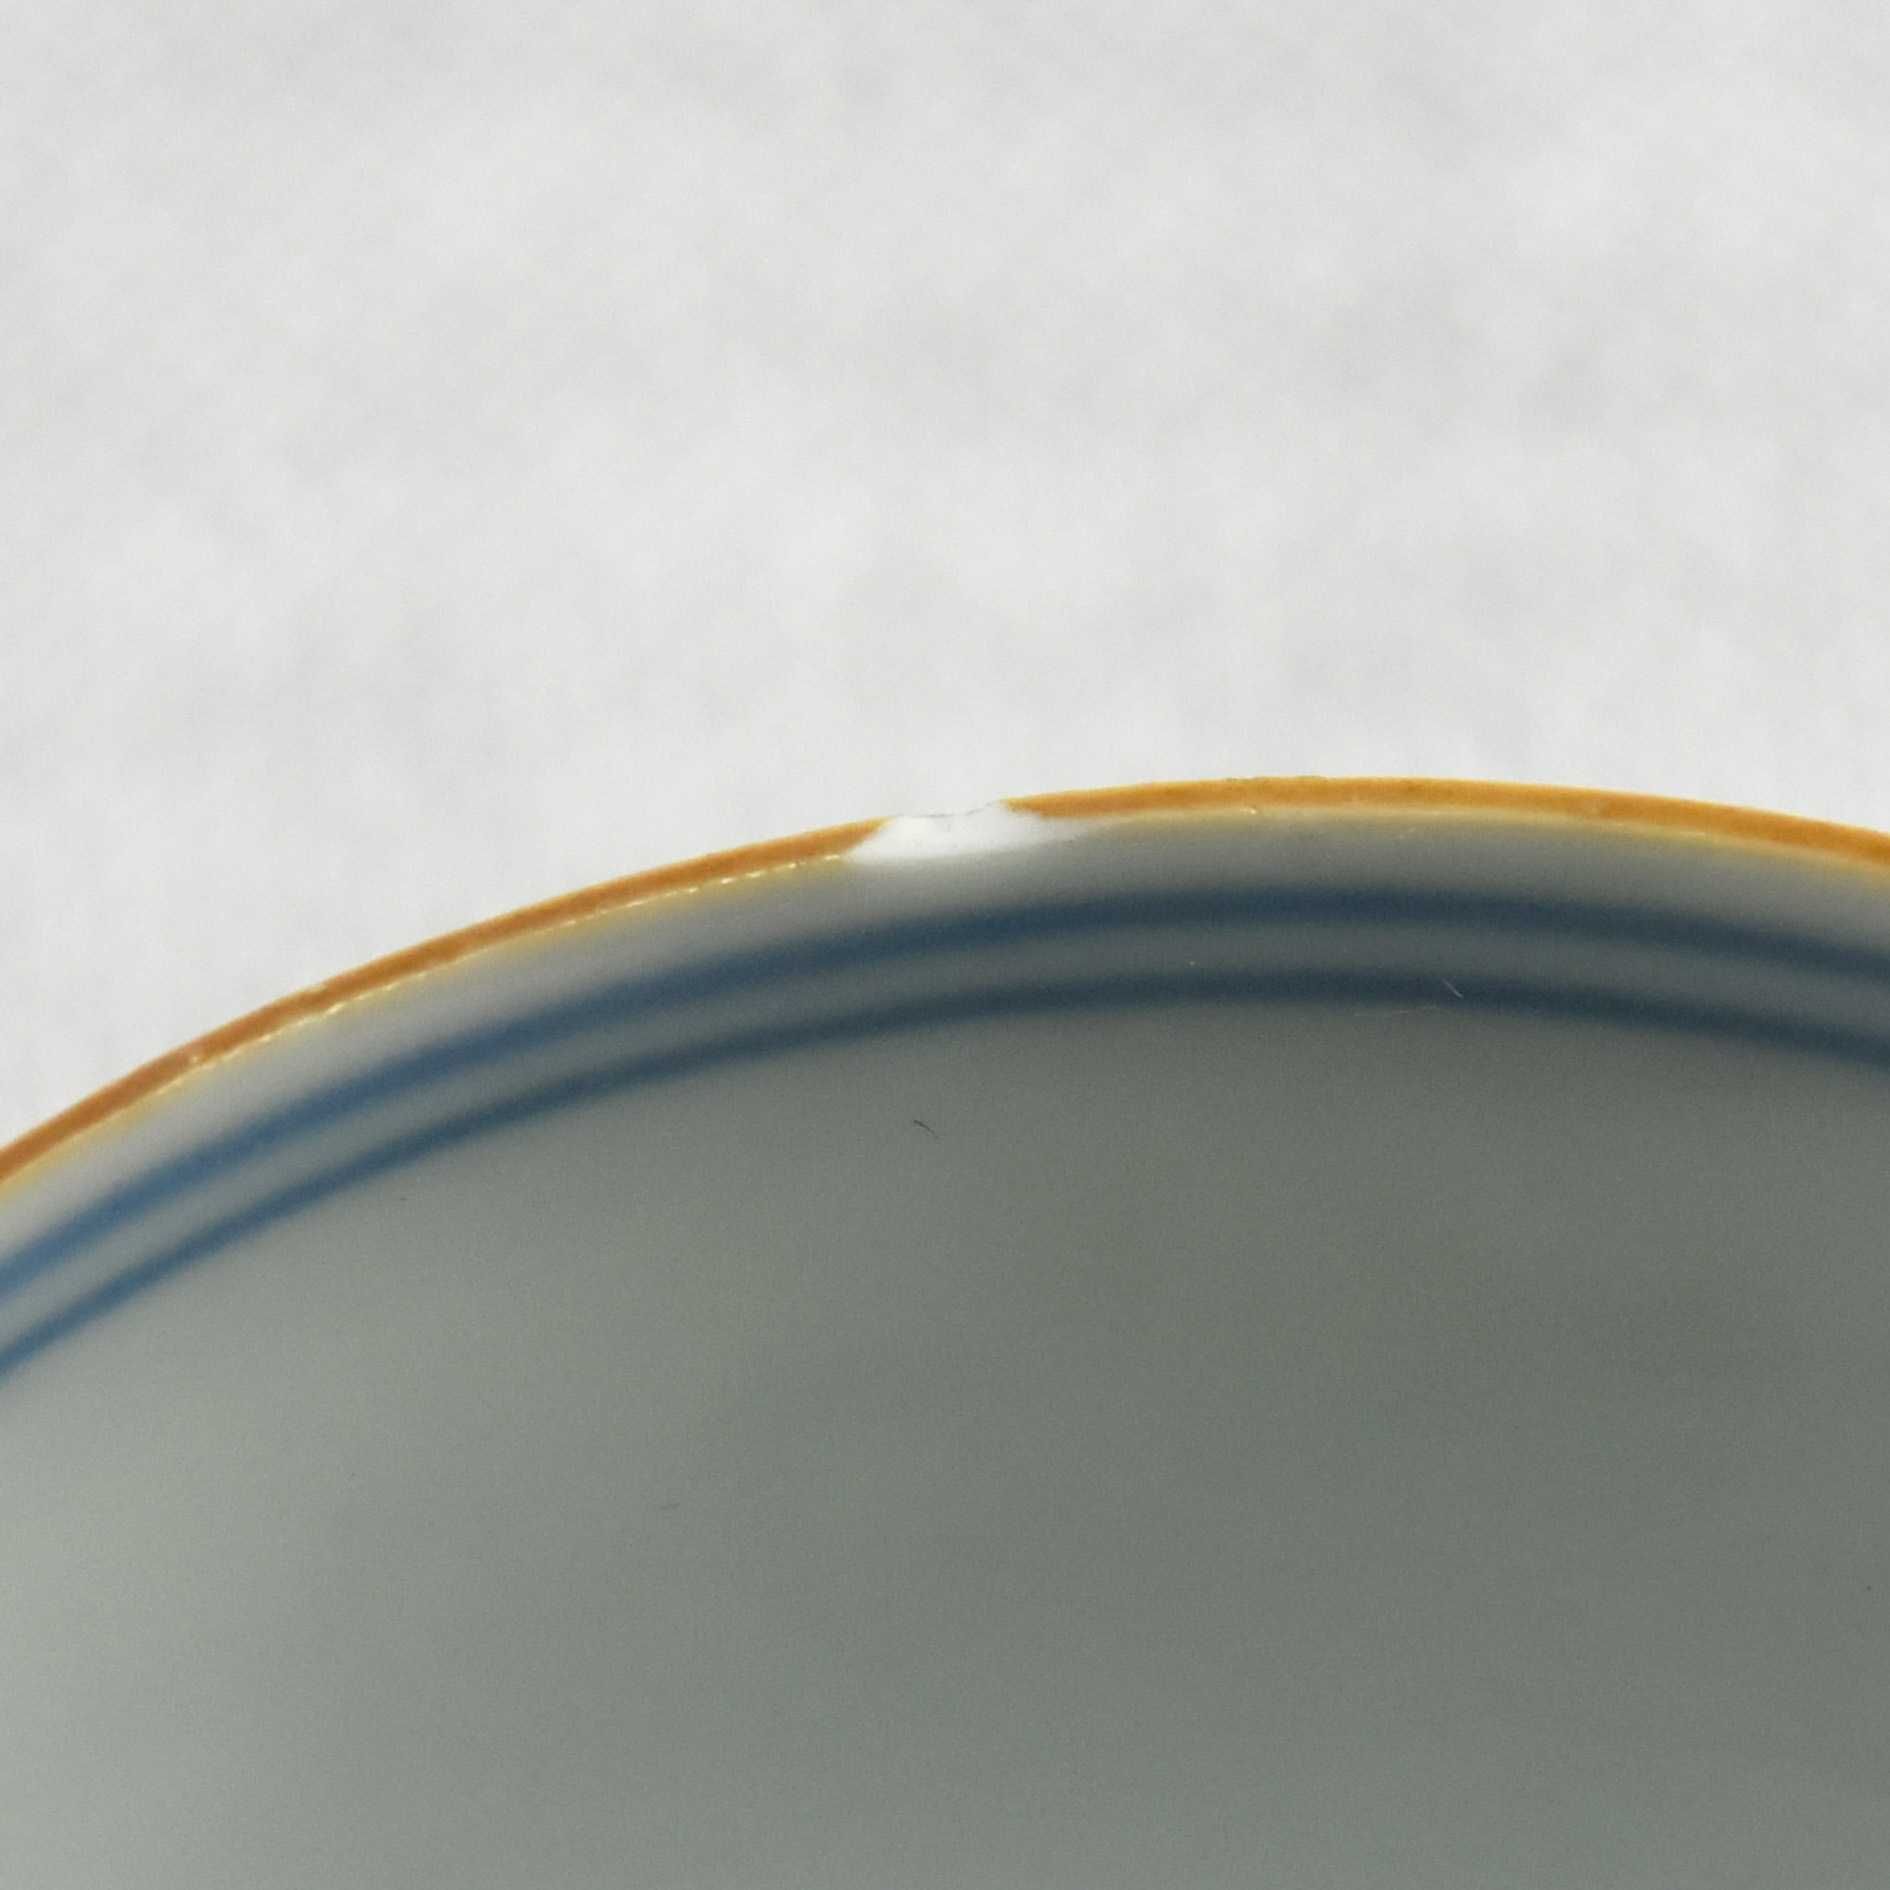 Rara Taça Porcelana da China, Qianlong, séc. XVIII